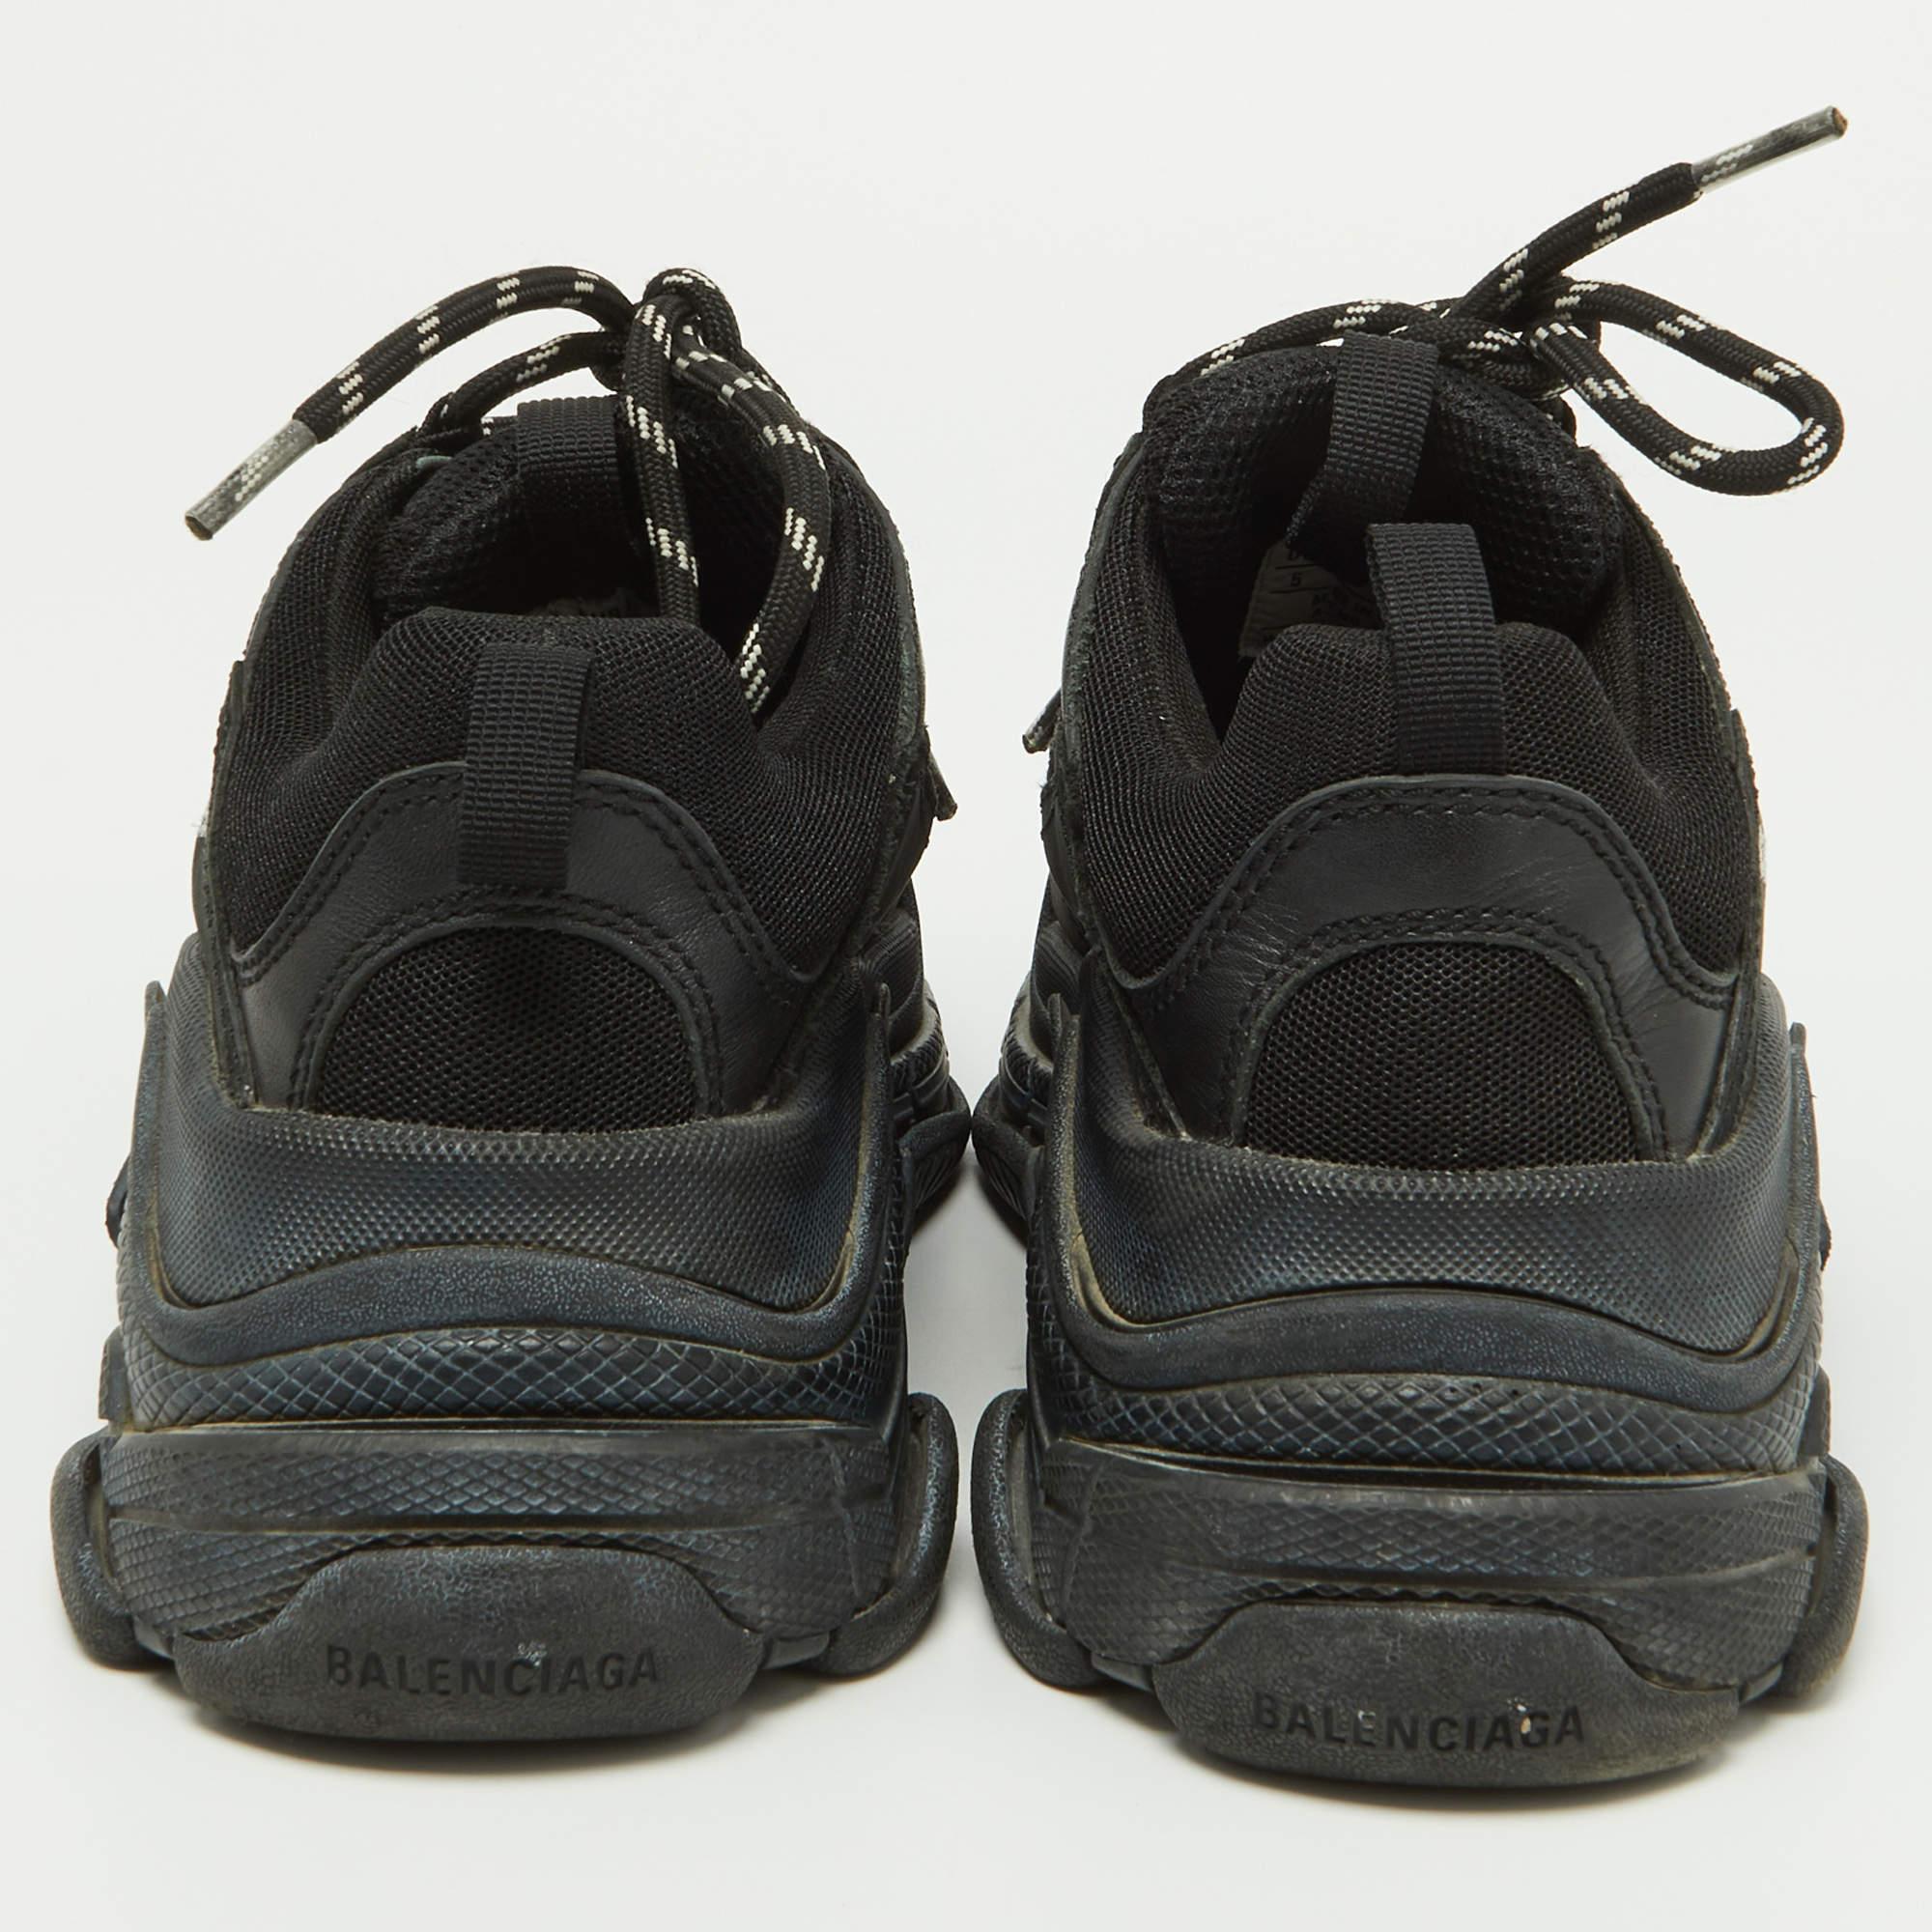 Balenciaga Black Mesh Nubuck and Nubuck Triple S Sneakers Size 38 For Sale 2